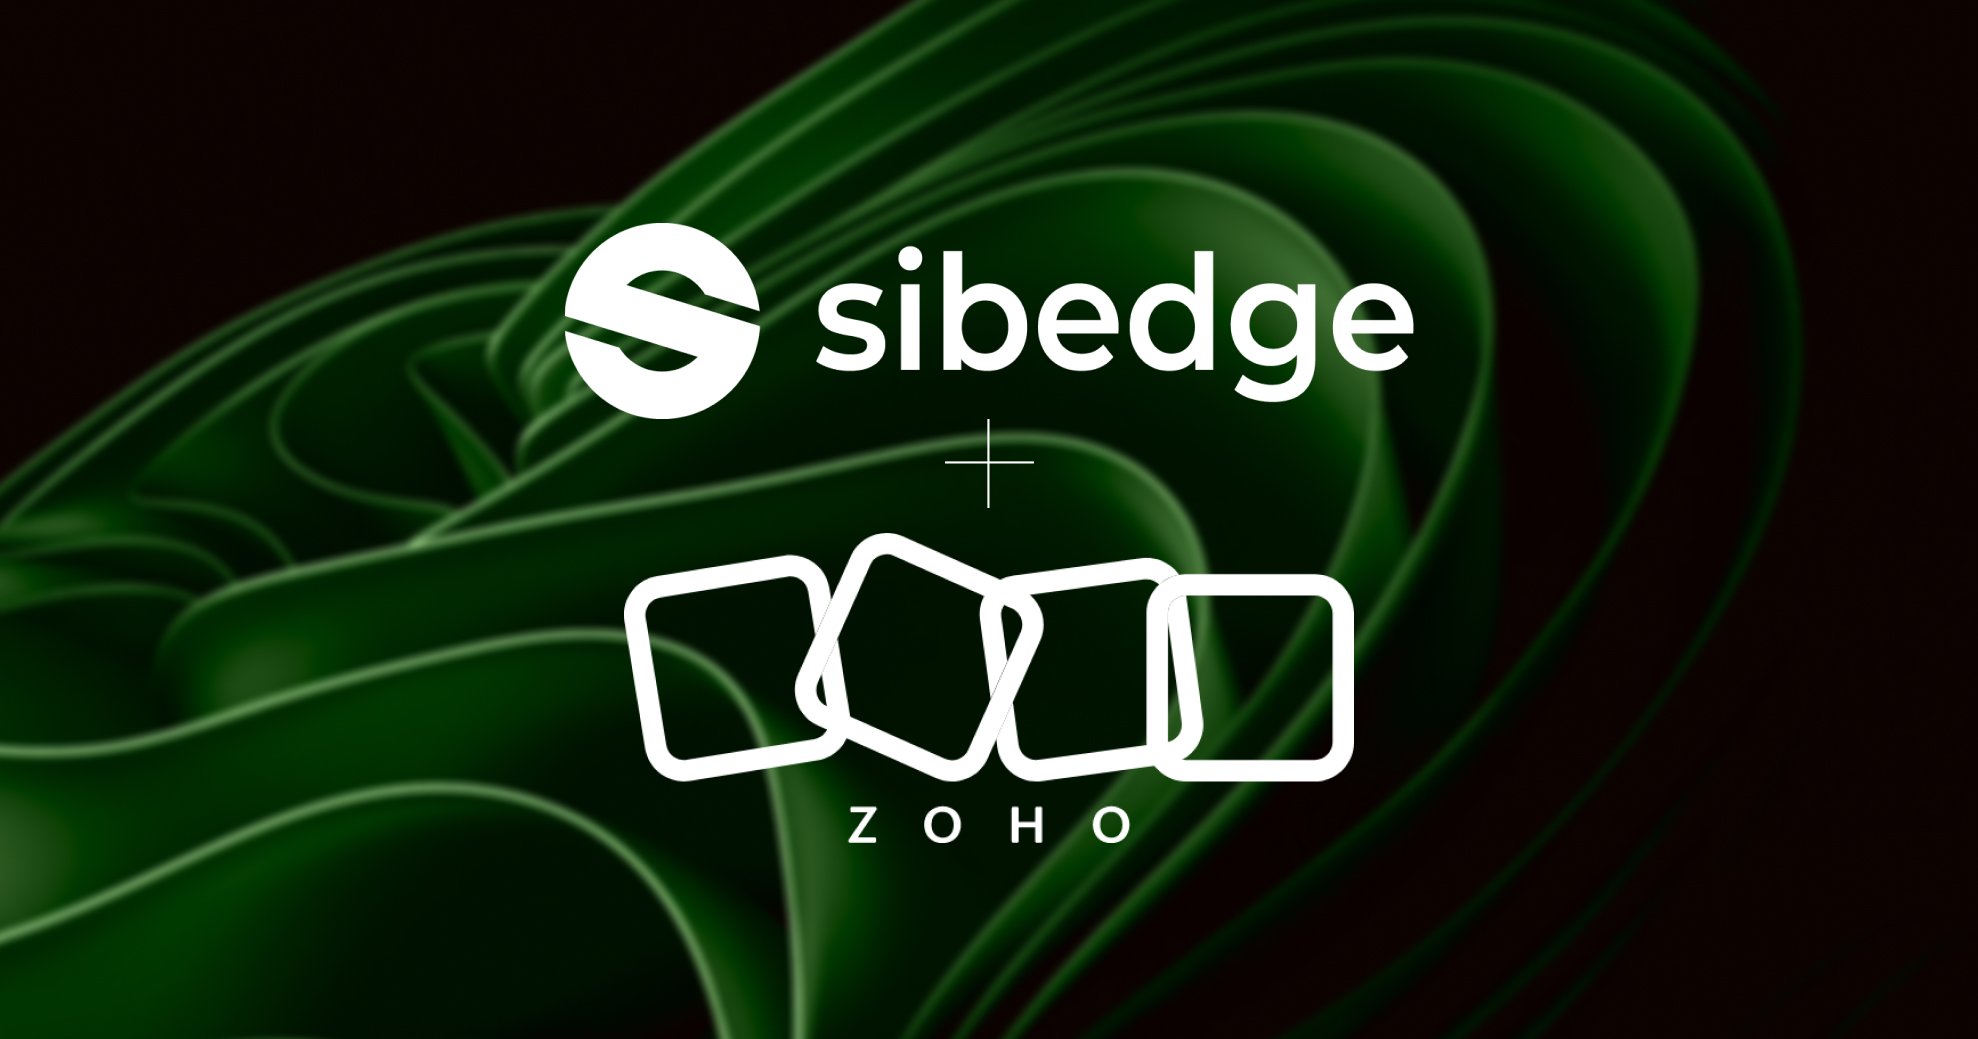 Sibedge и Zoho: партнёрство длиною в 6 лет